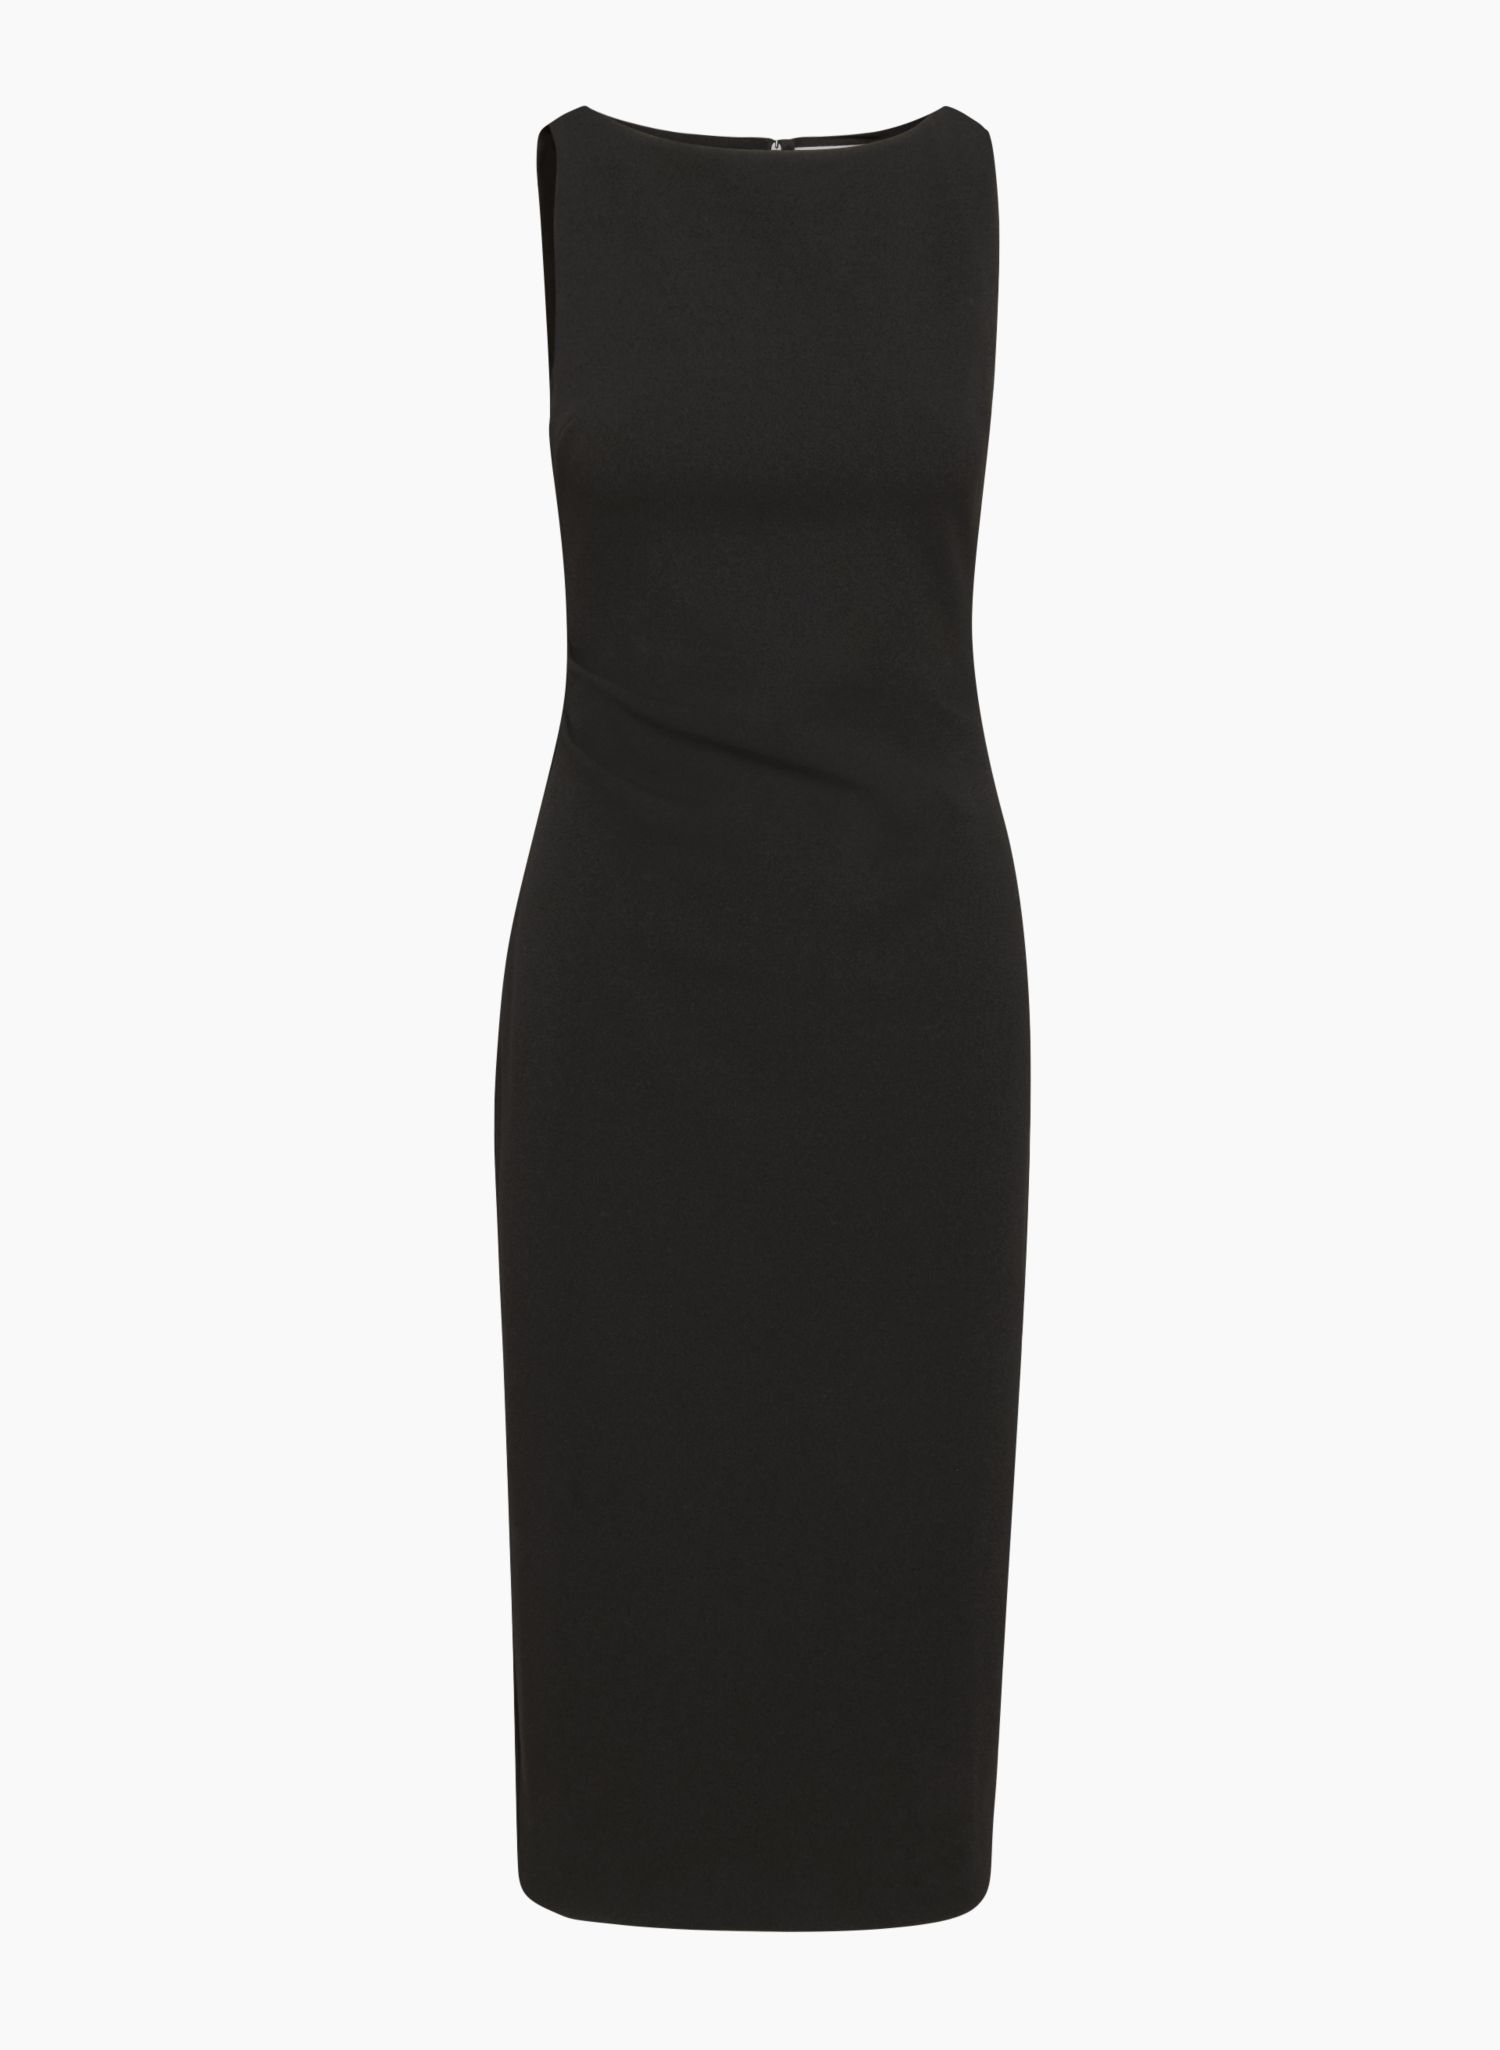 Midi length black dress from Aritzia.